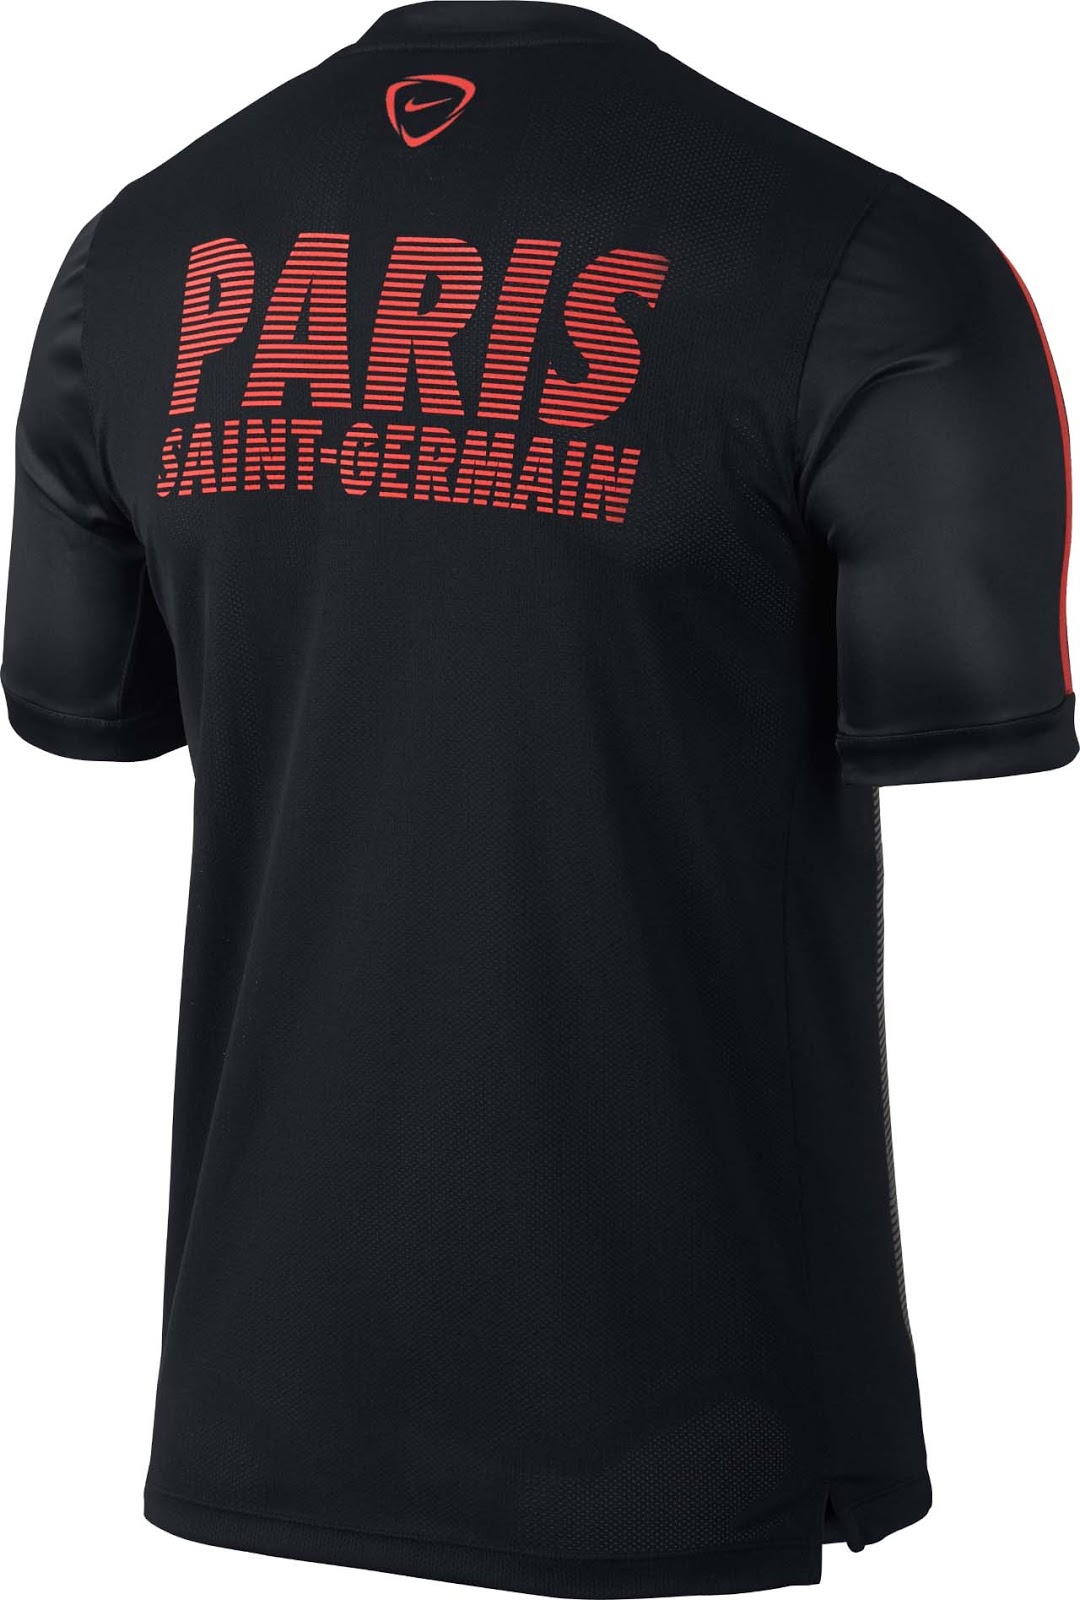 Paris SaintGermain 2015 PreMatch and Training Shirts Unveiled  Footy